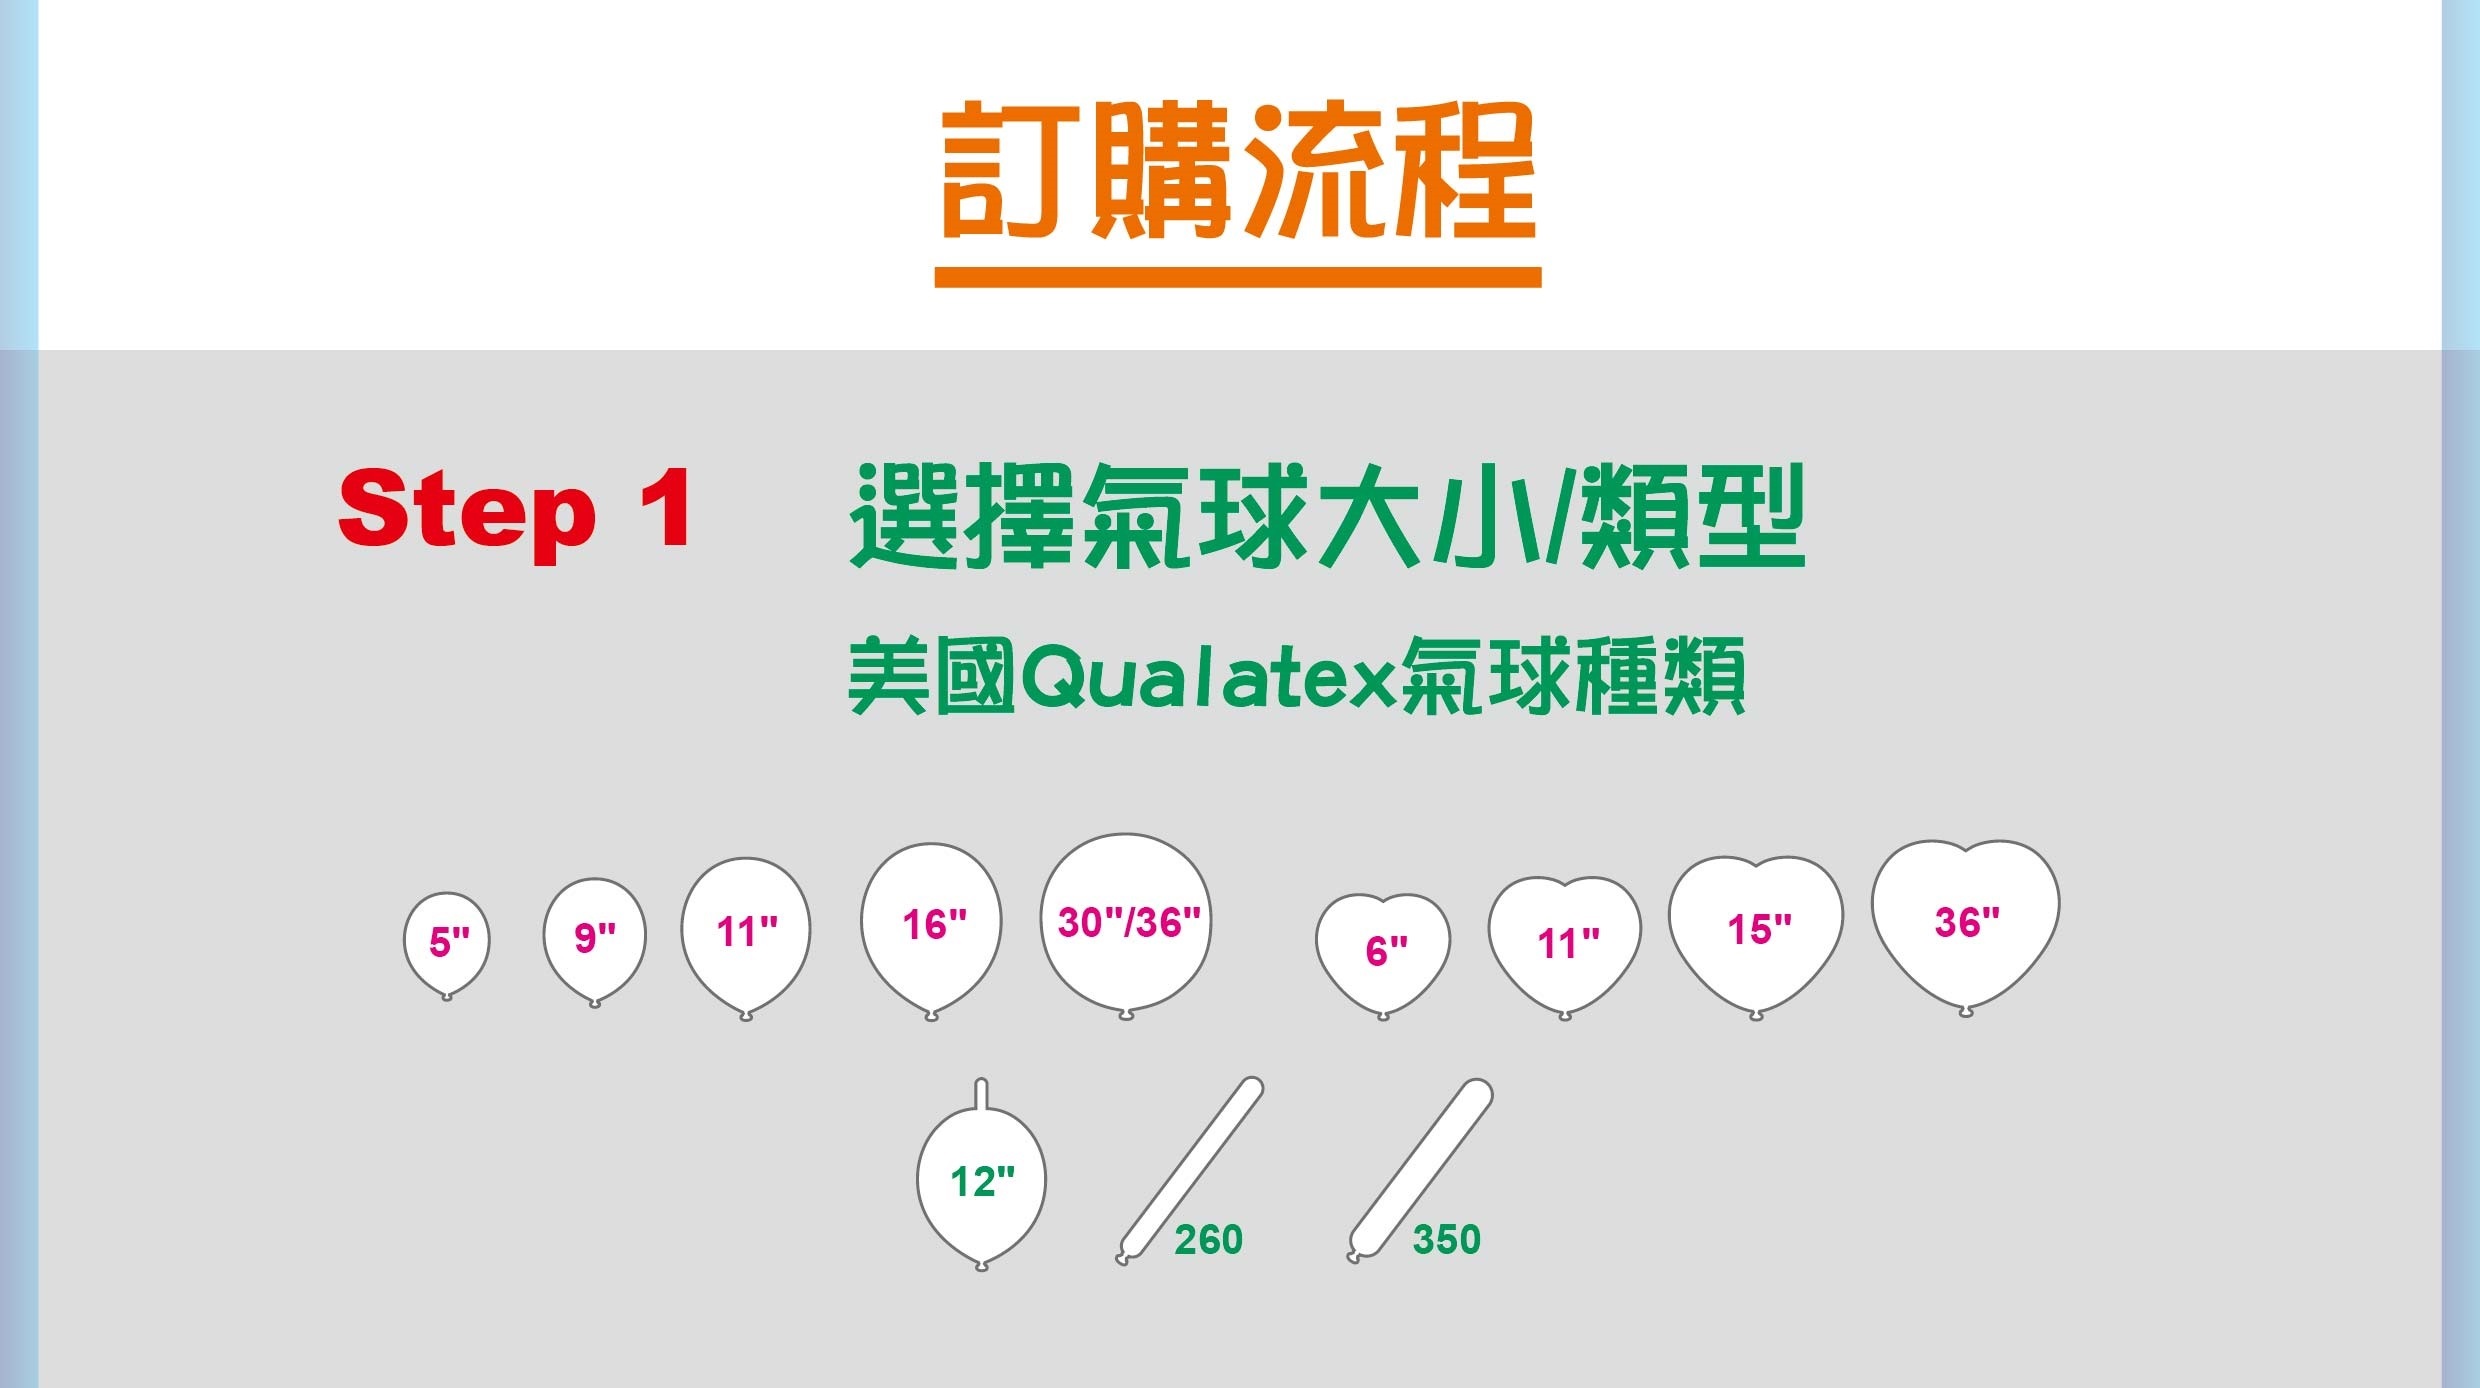 Qualatex流程-01_1N.jpg (2480×1388)